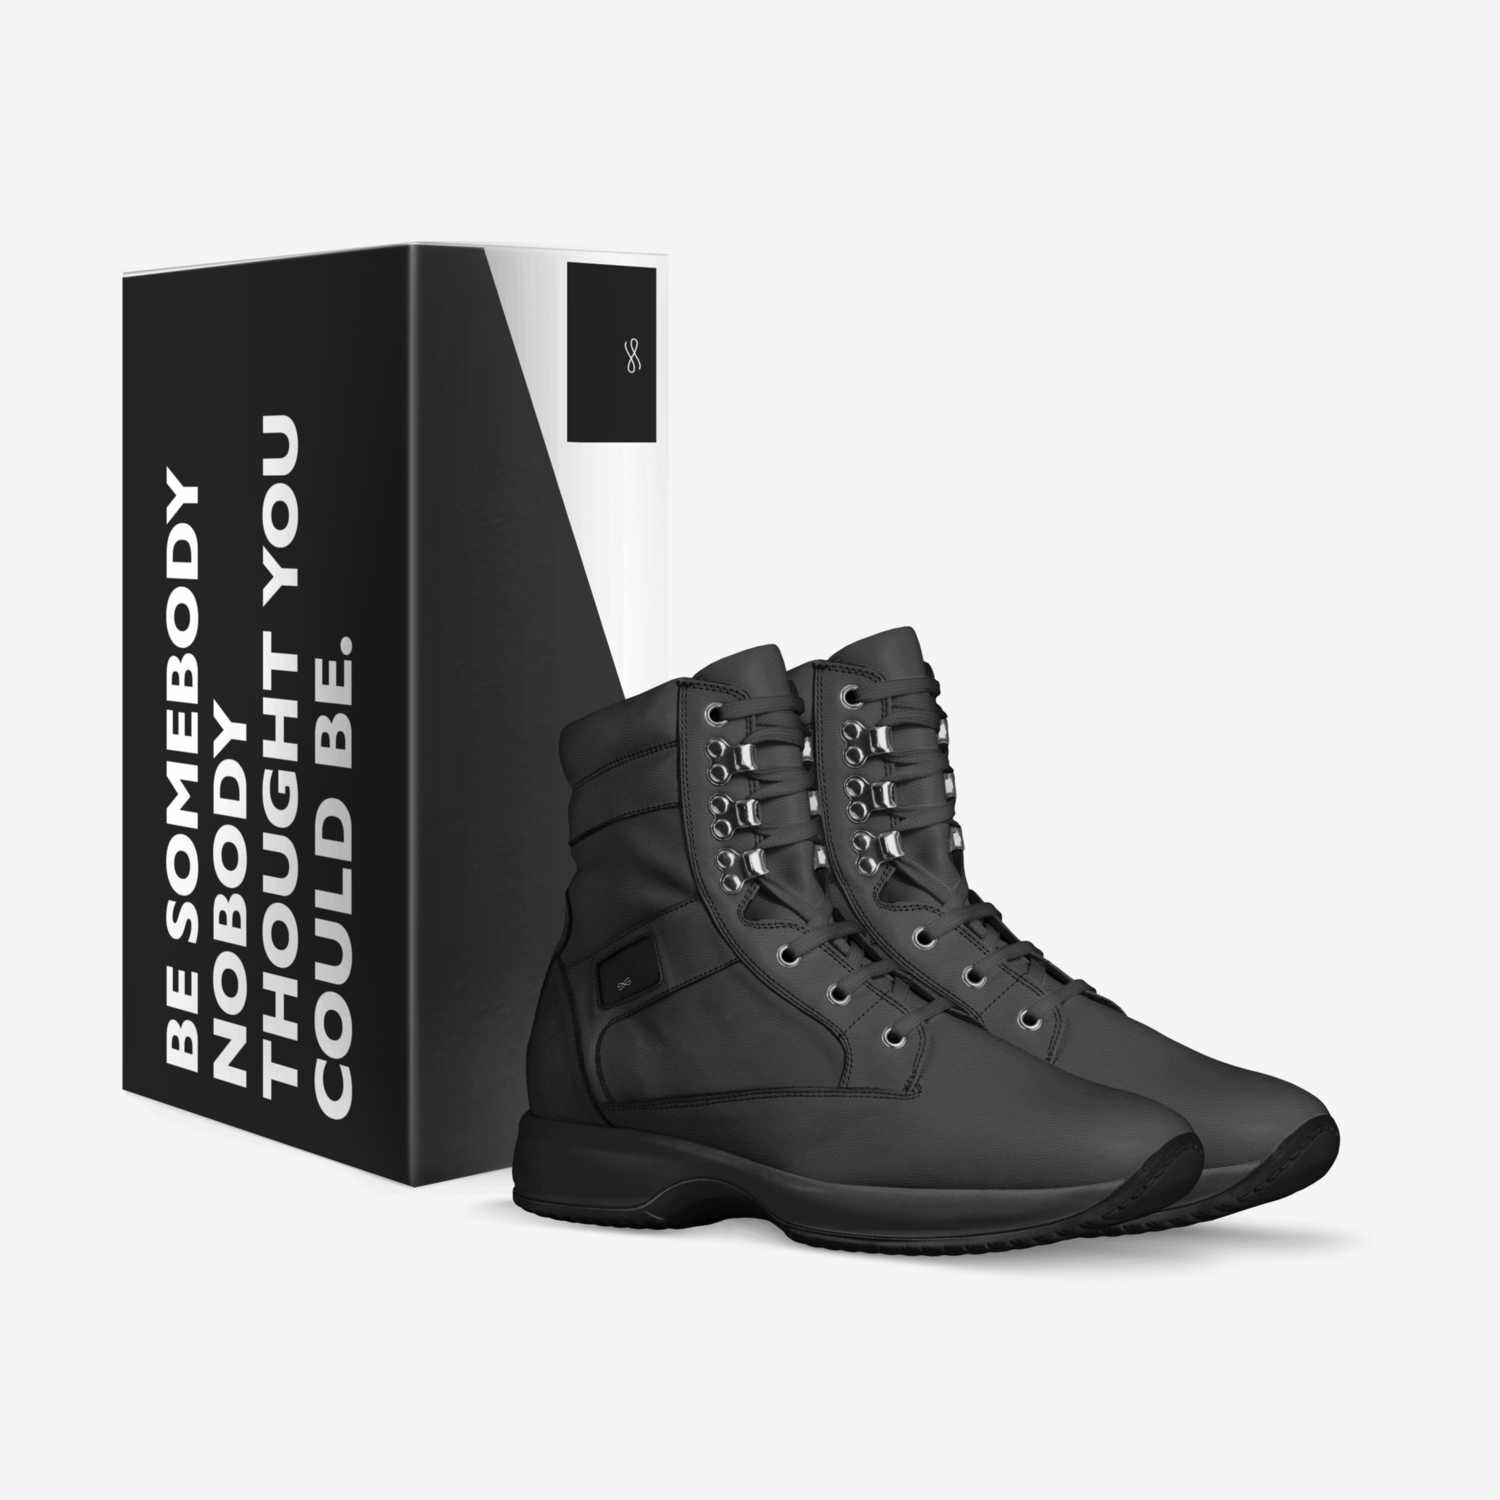 FUCKOFF custom made in Italy shoes by Daniel Hanton | Box view